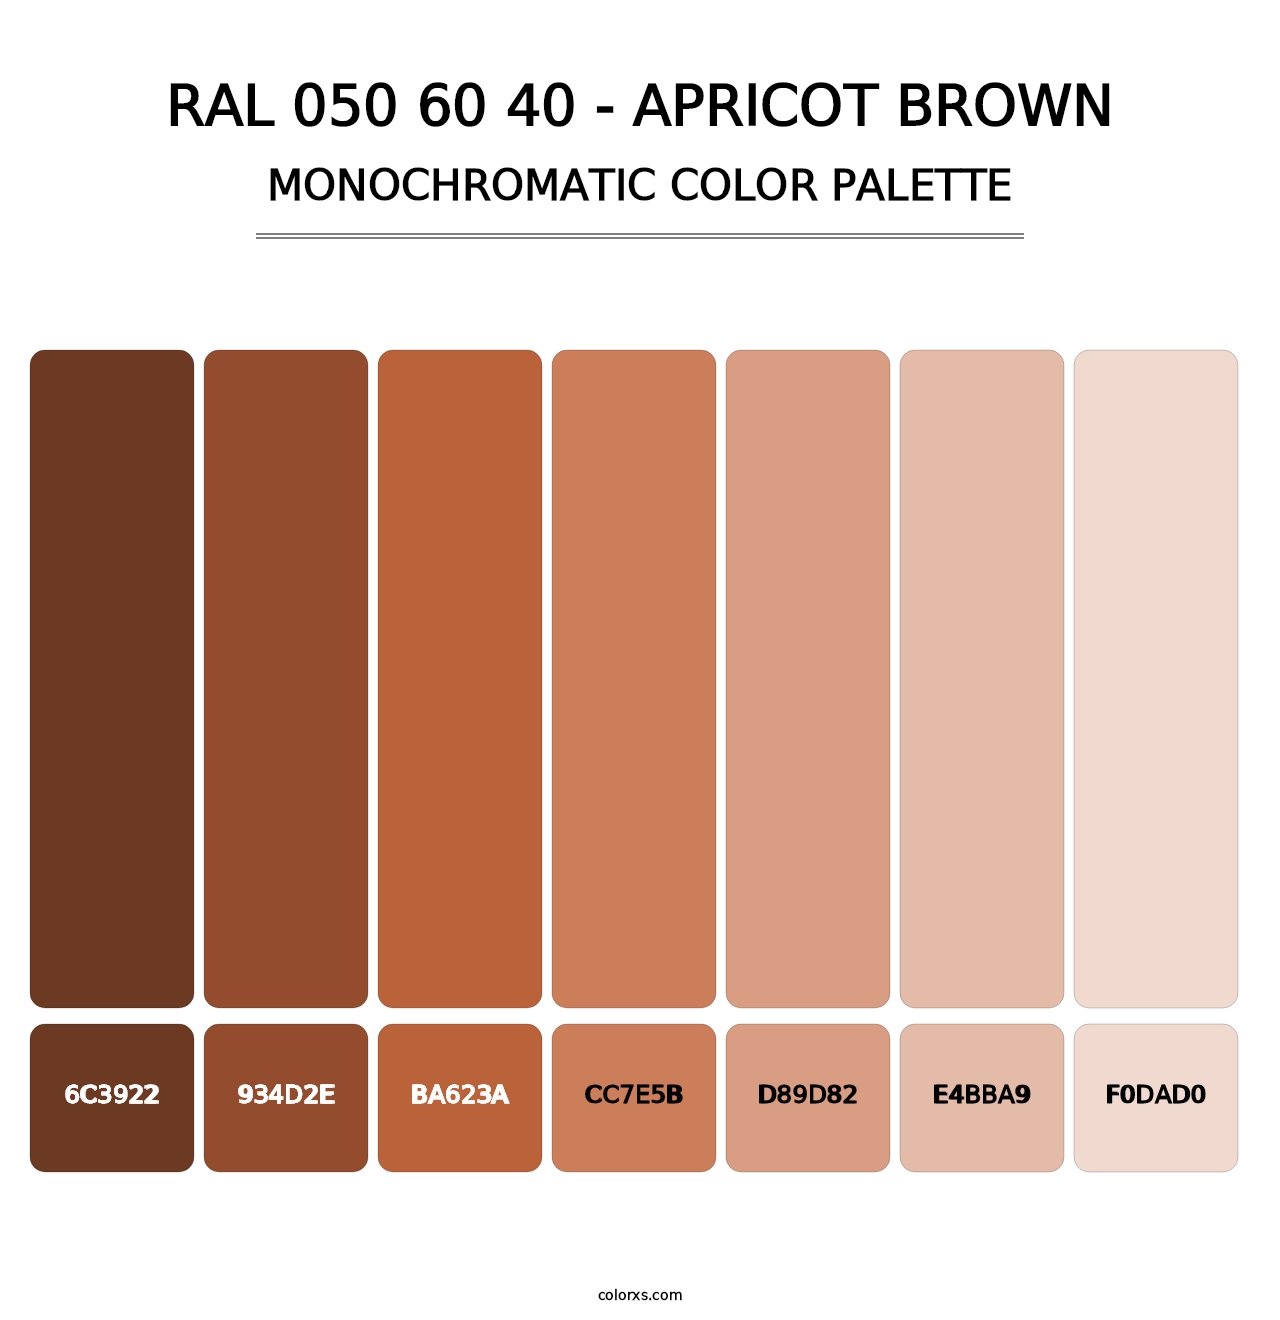 RAL 050 60 40 - Apricot Brown - Monochromatic Color Palette